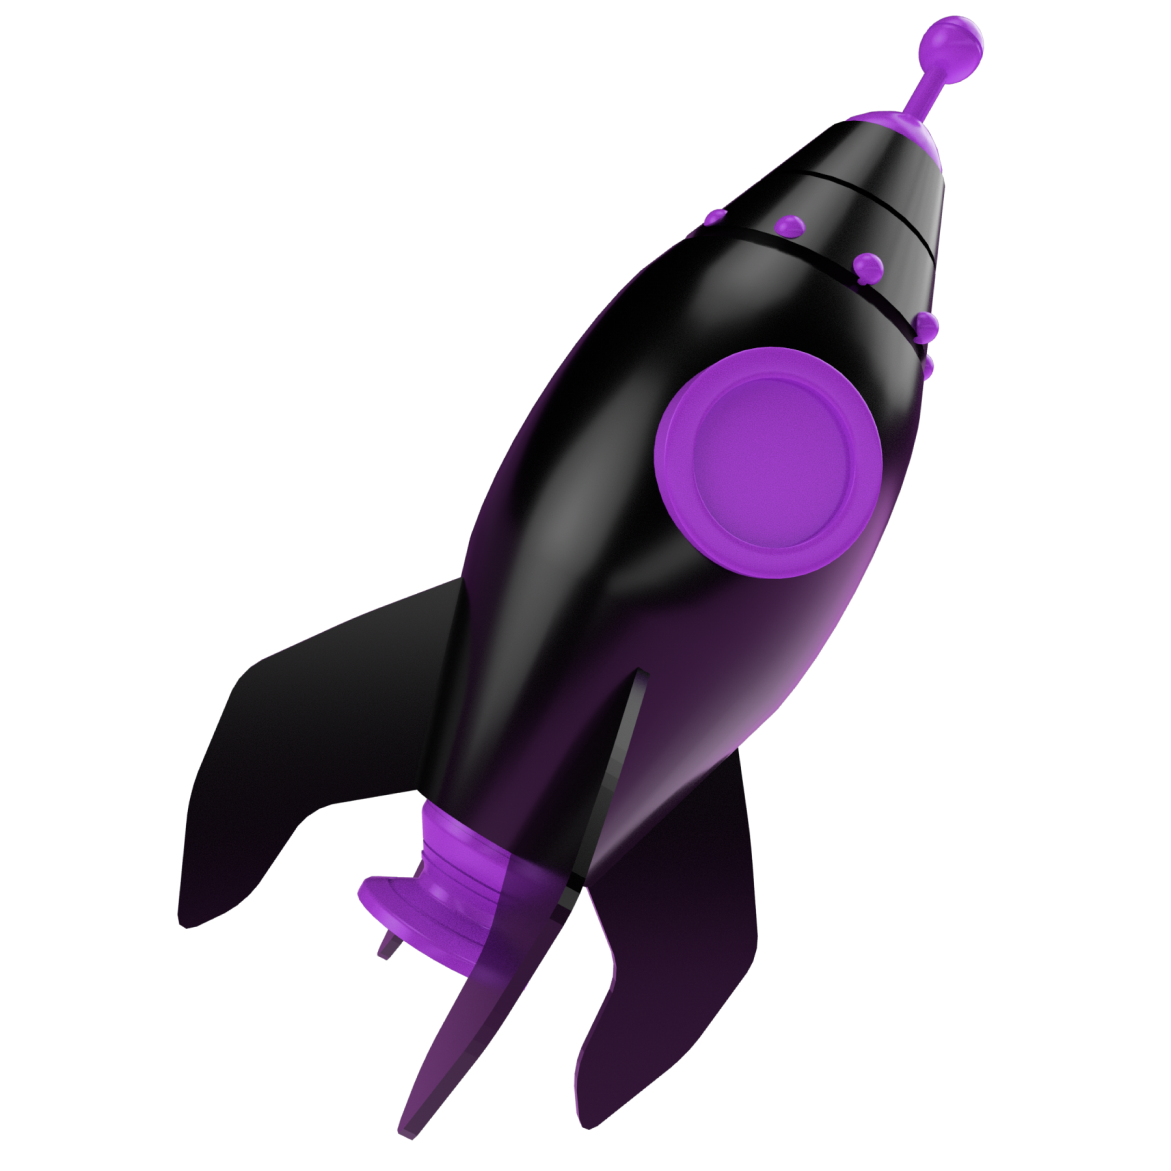 Purple exboost toy rocket